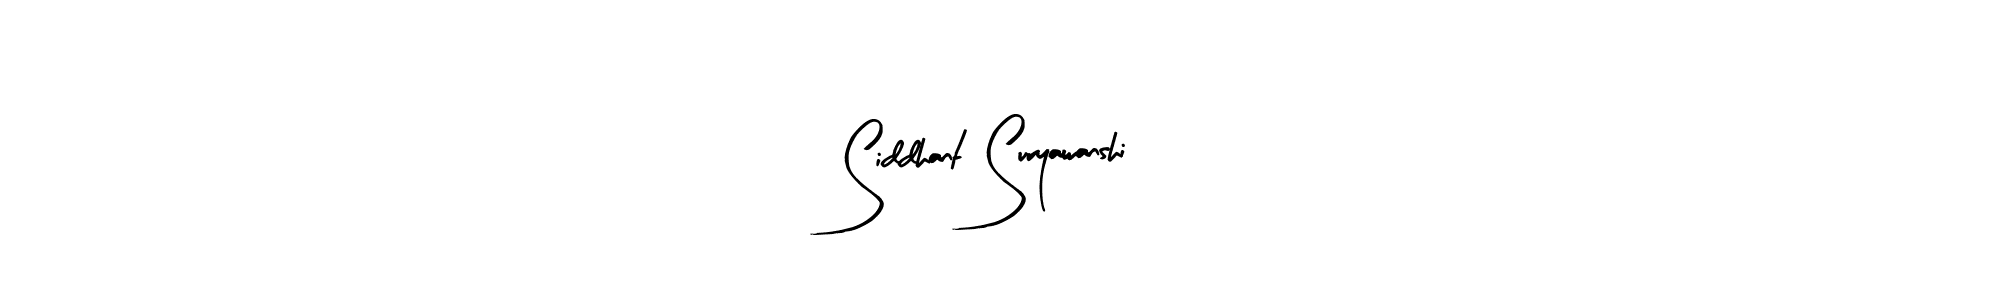 How to Draw Siddhant Suryawanshi signature style? Arty Signature is a latest design signature styles for name Siddhant Suryawanshi. Siddhant Suryawanshi signature style 8 images and pictures png